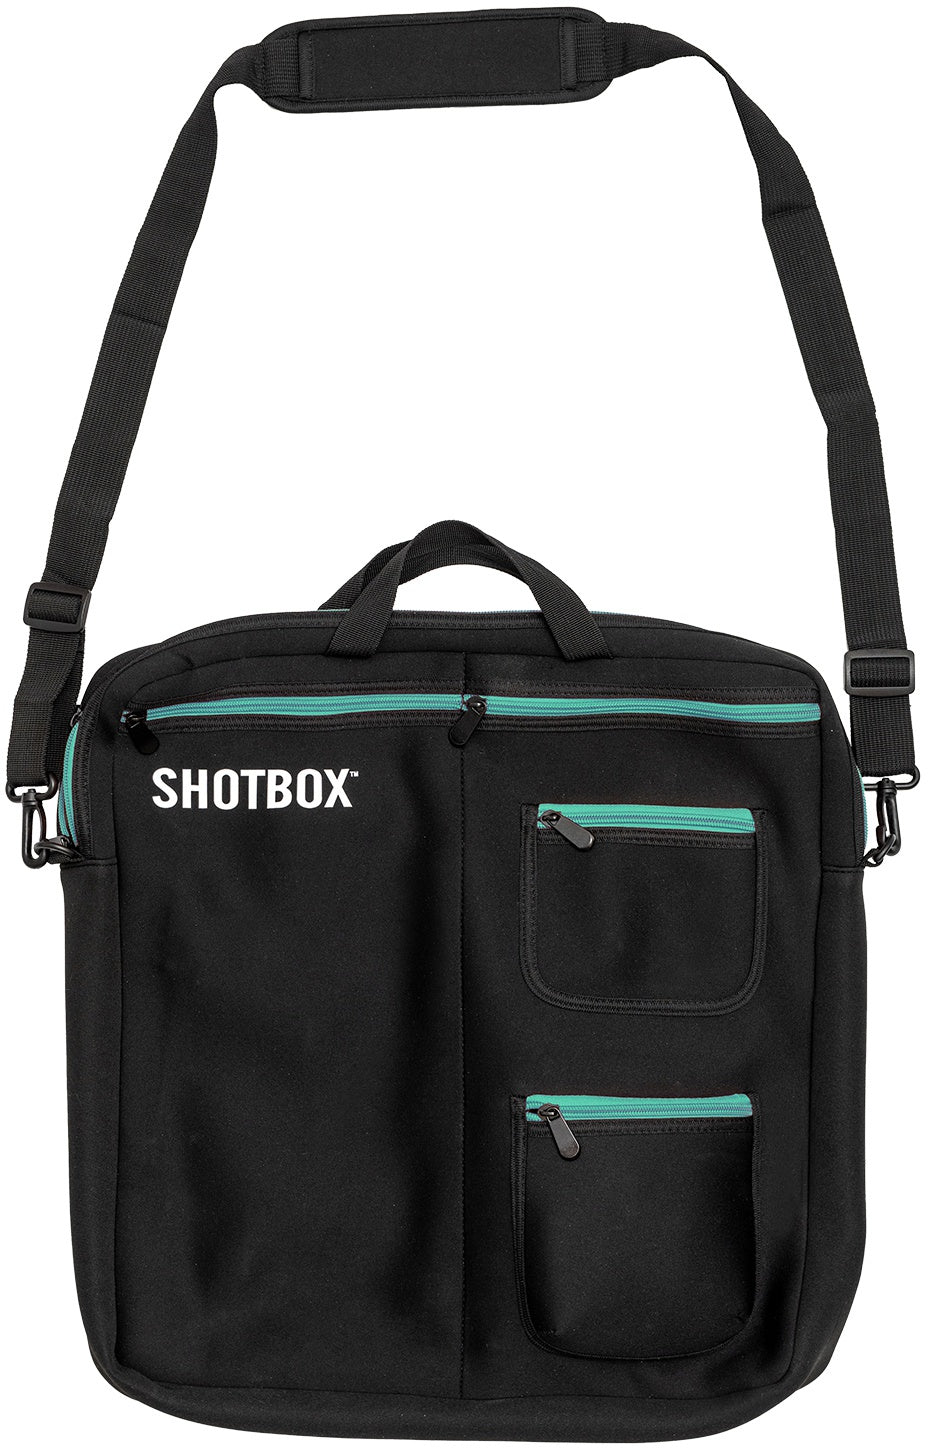 We R Memory Keepers ShotBox Premium Storage Bag